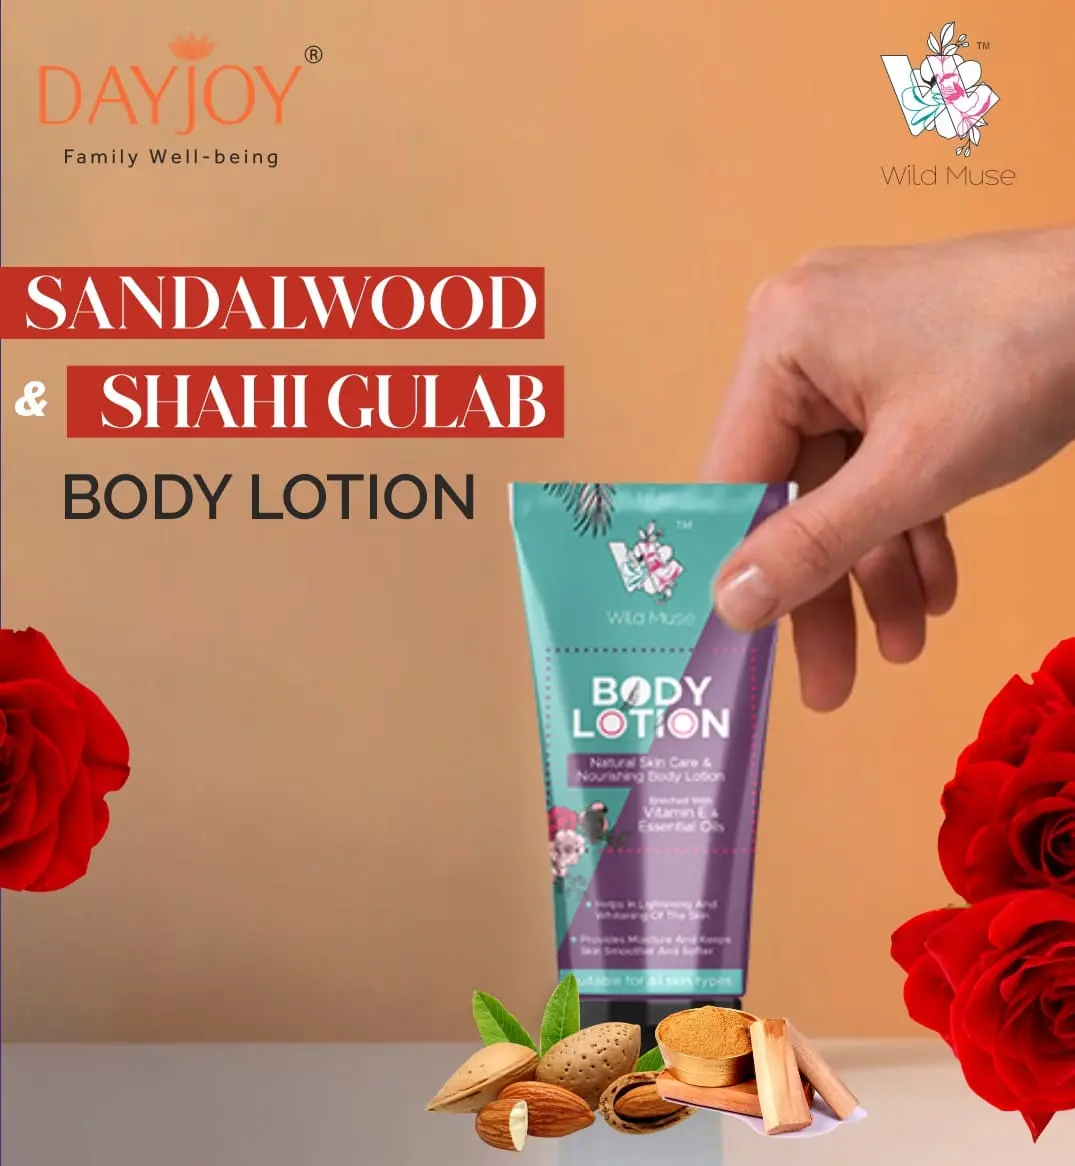 Sandalwood & Shahi Gulab Body Lotion (150ml)